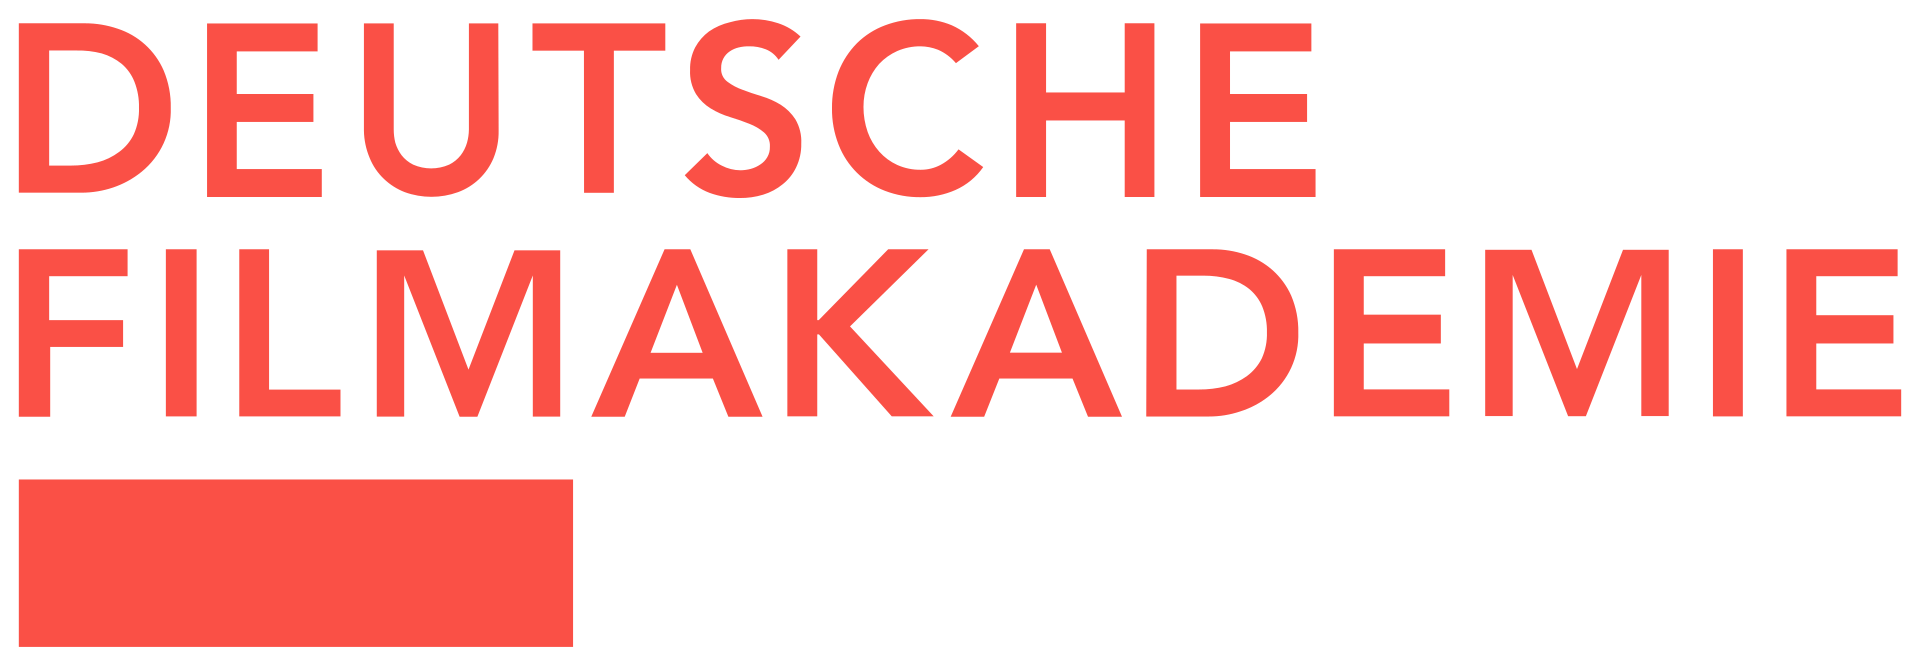 Logo Deutsche Filmakademie